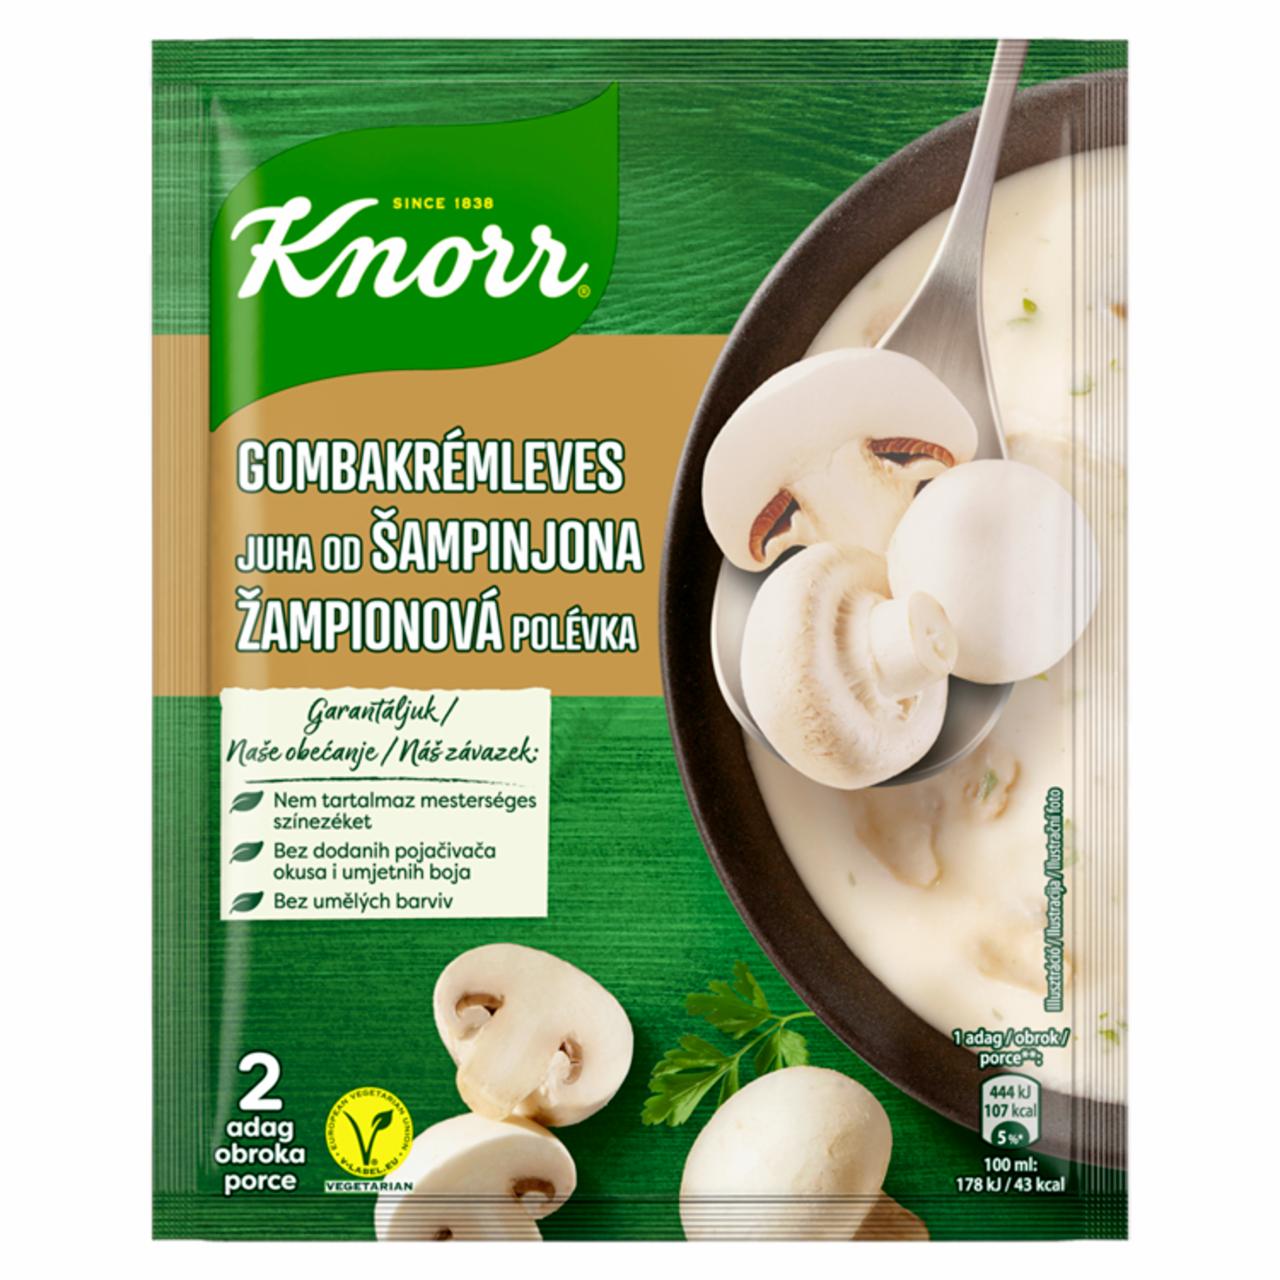 Képek - Knorr gombakrémleves 45 g